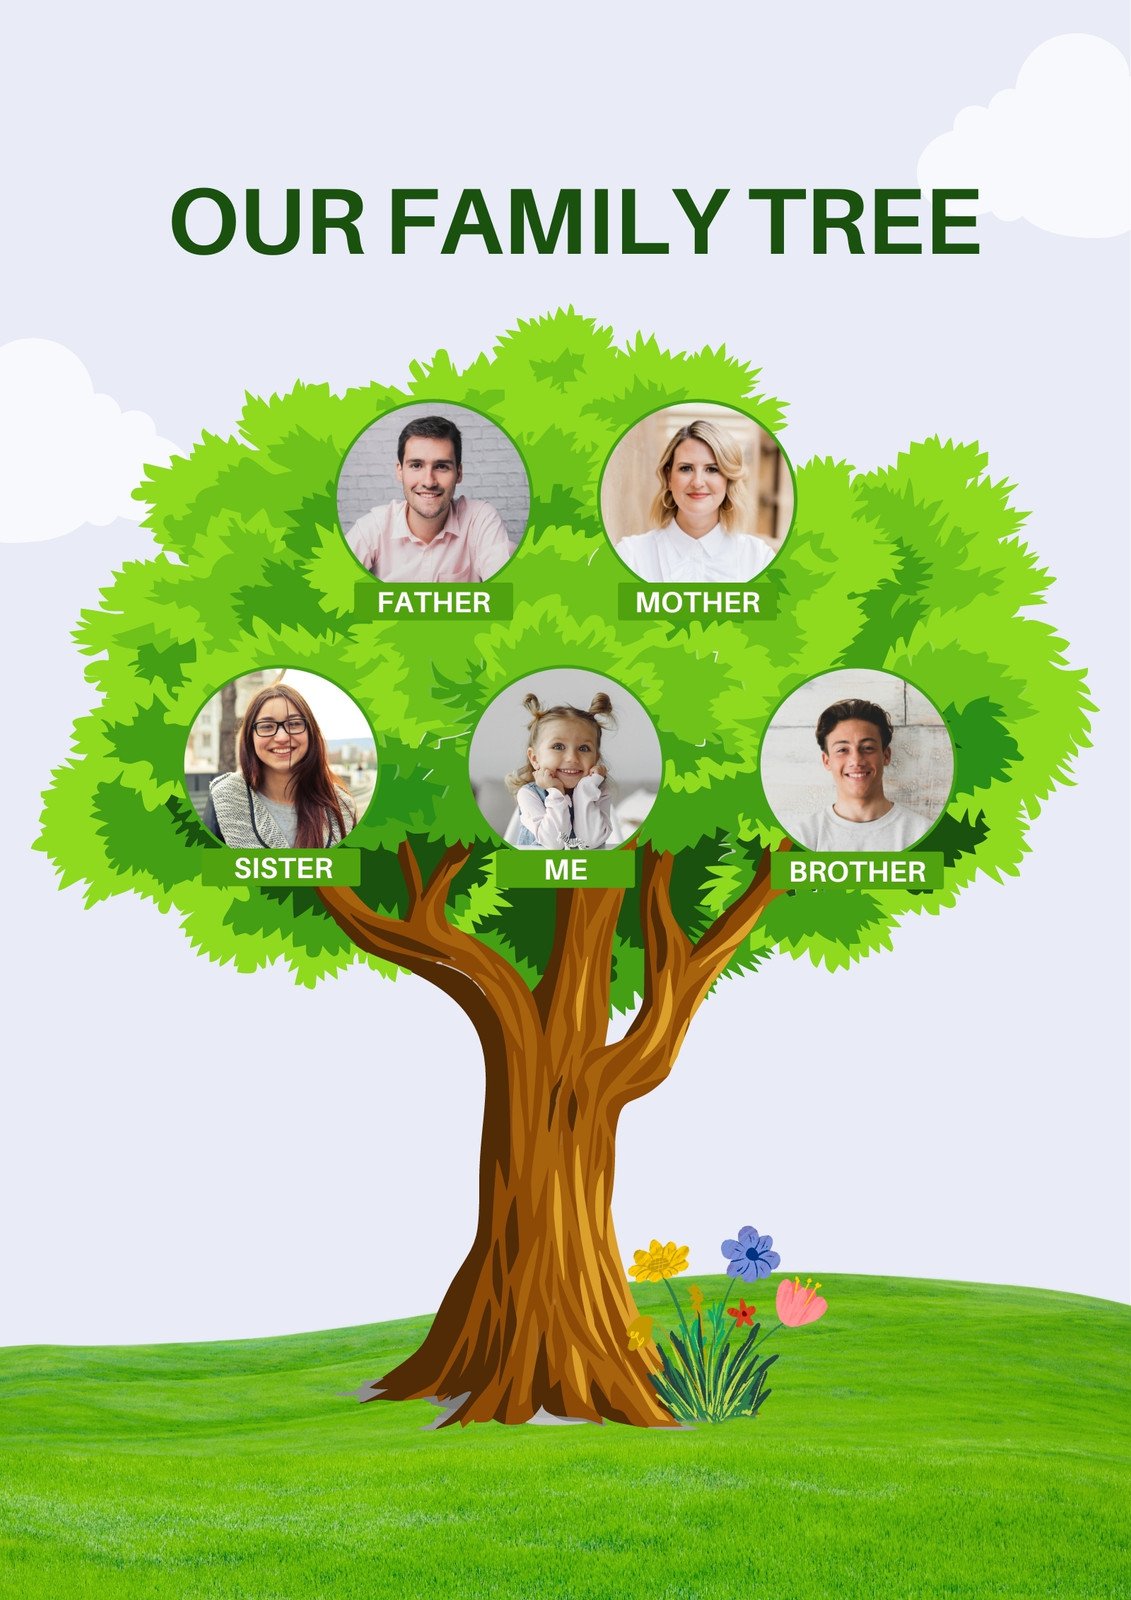 Digital Family Tree Template 7 Generations Editable in Canva 7GEN KOFI 